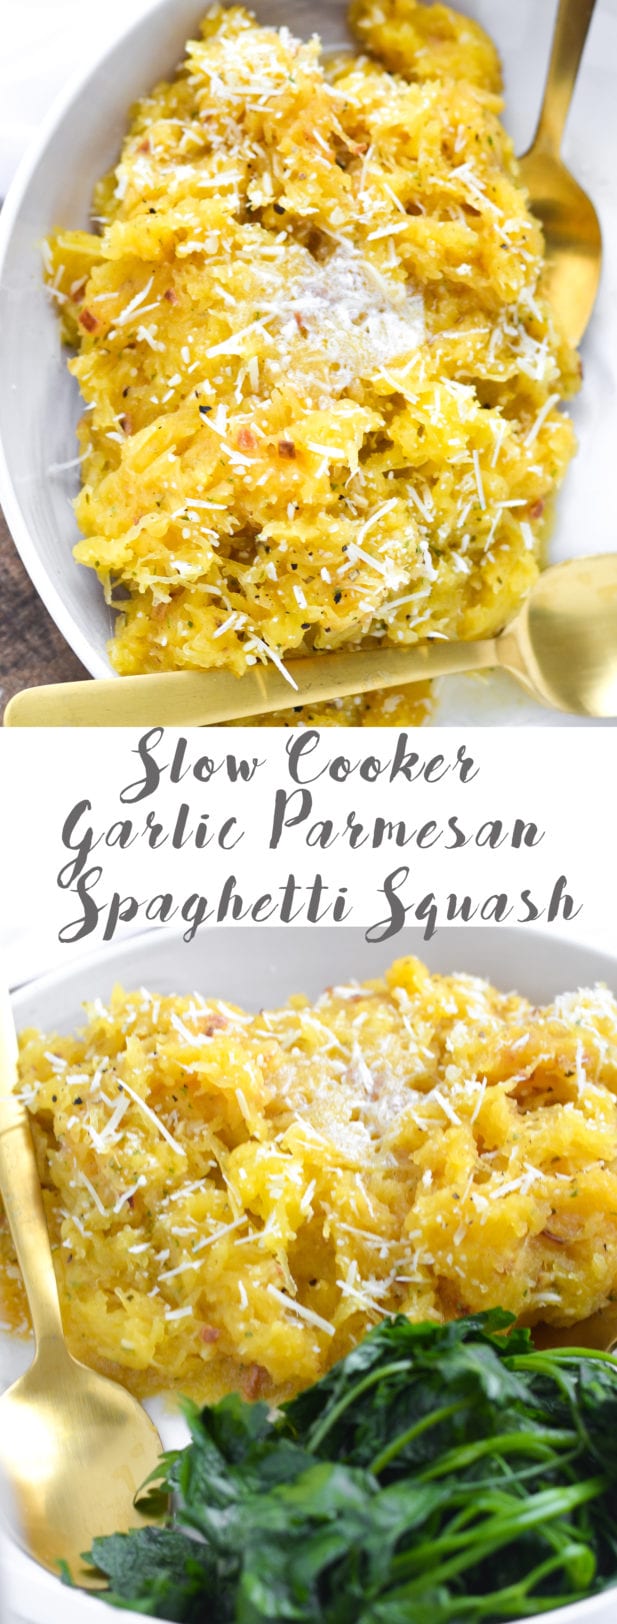 Slow Cooker Garlic Parmesan Spaghetti Squash